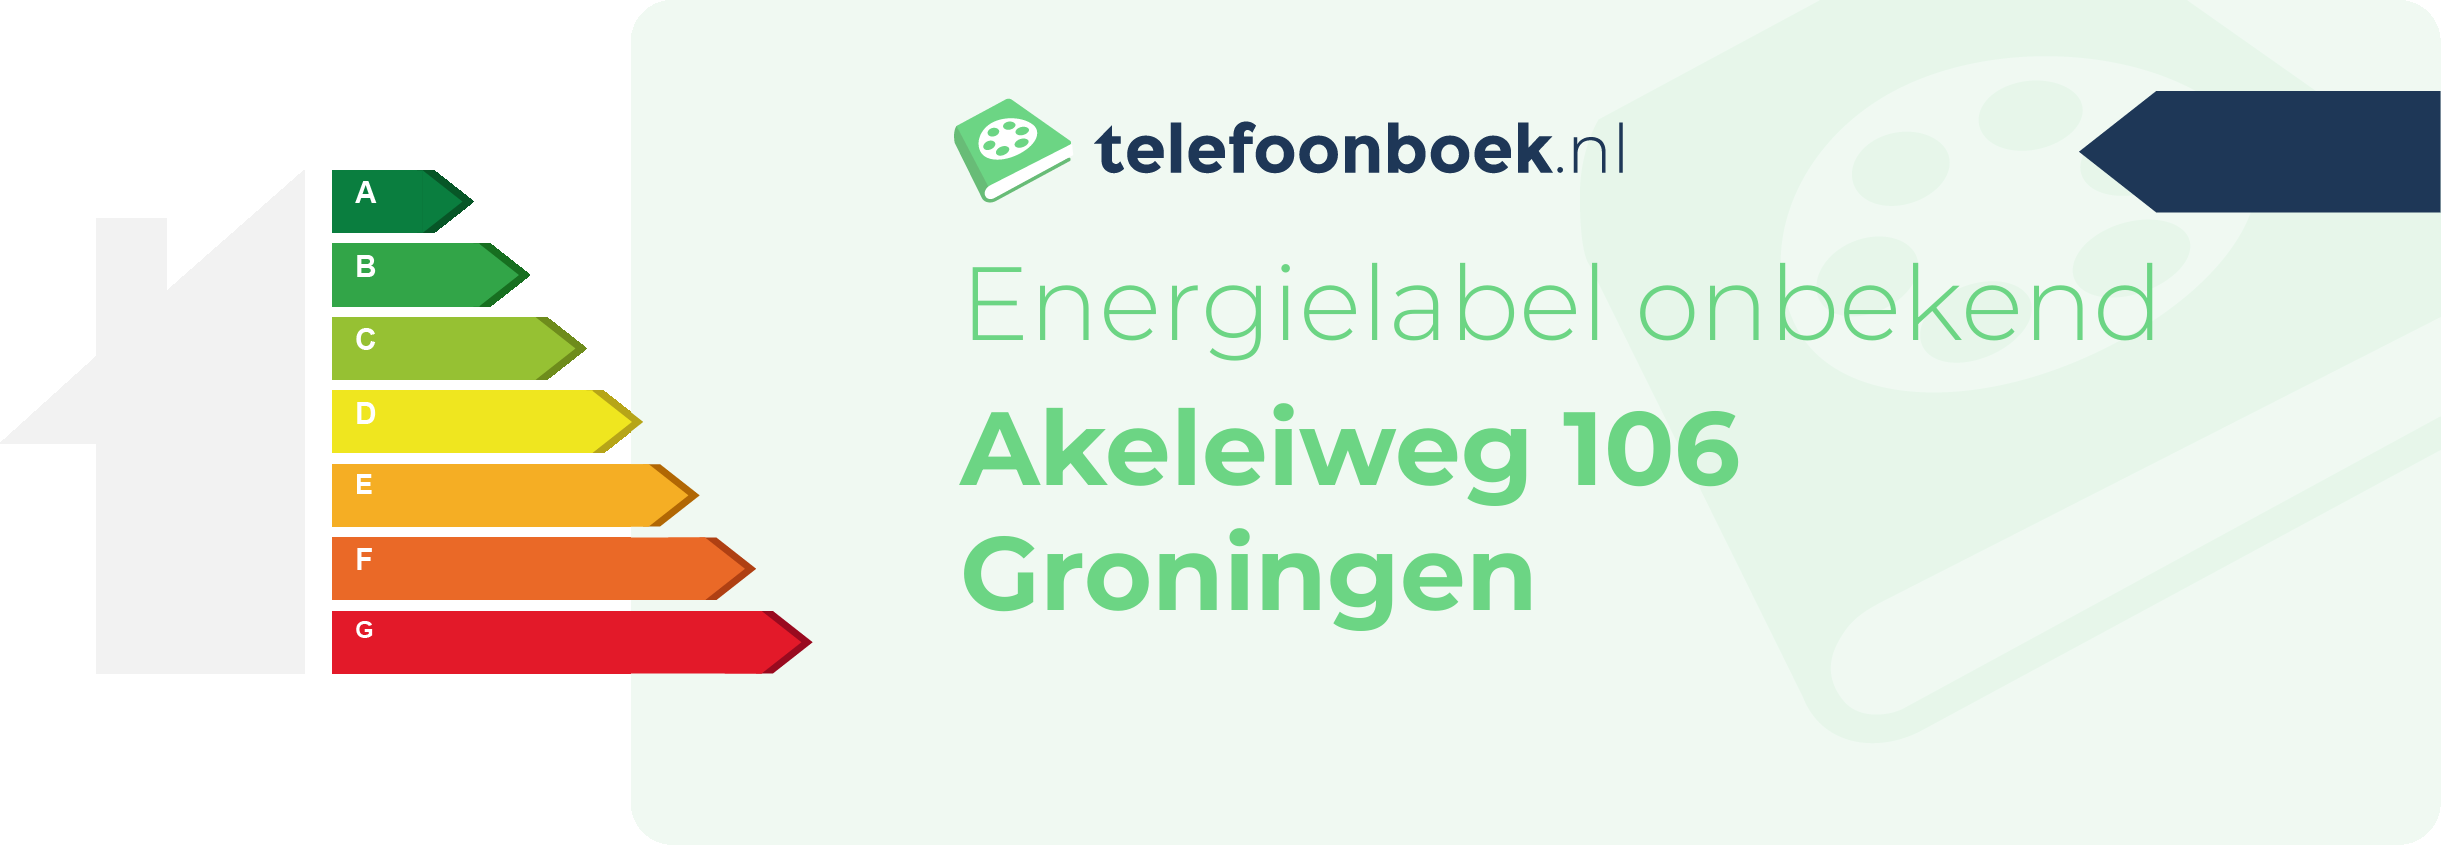 Energielabel Akeleiweg 106 Groningen